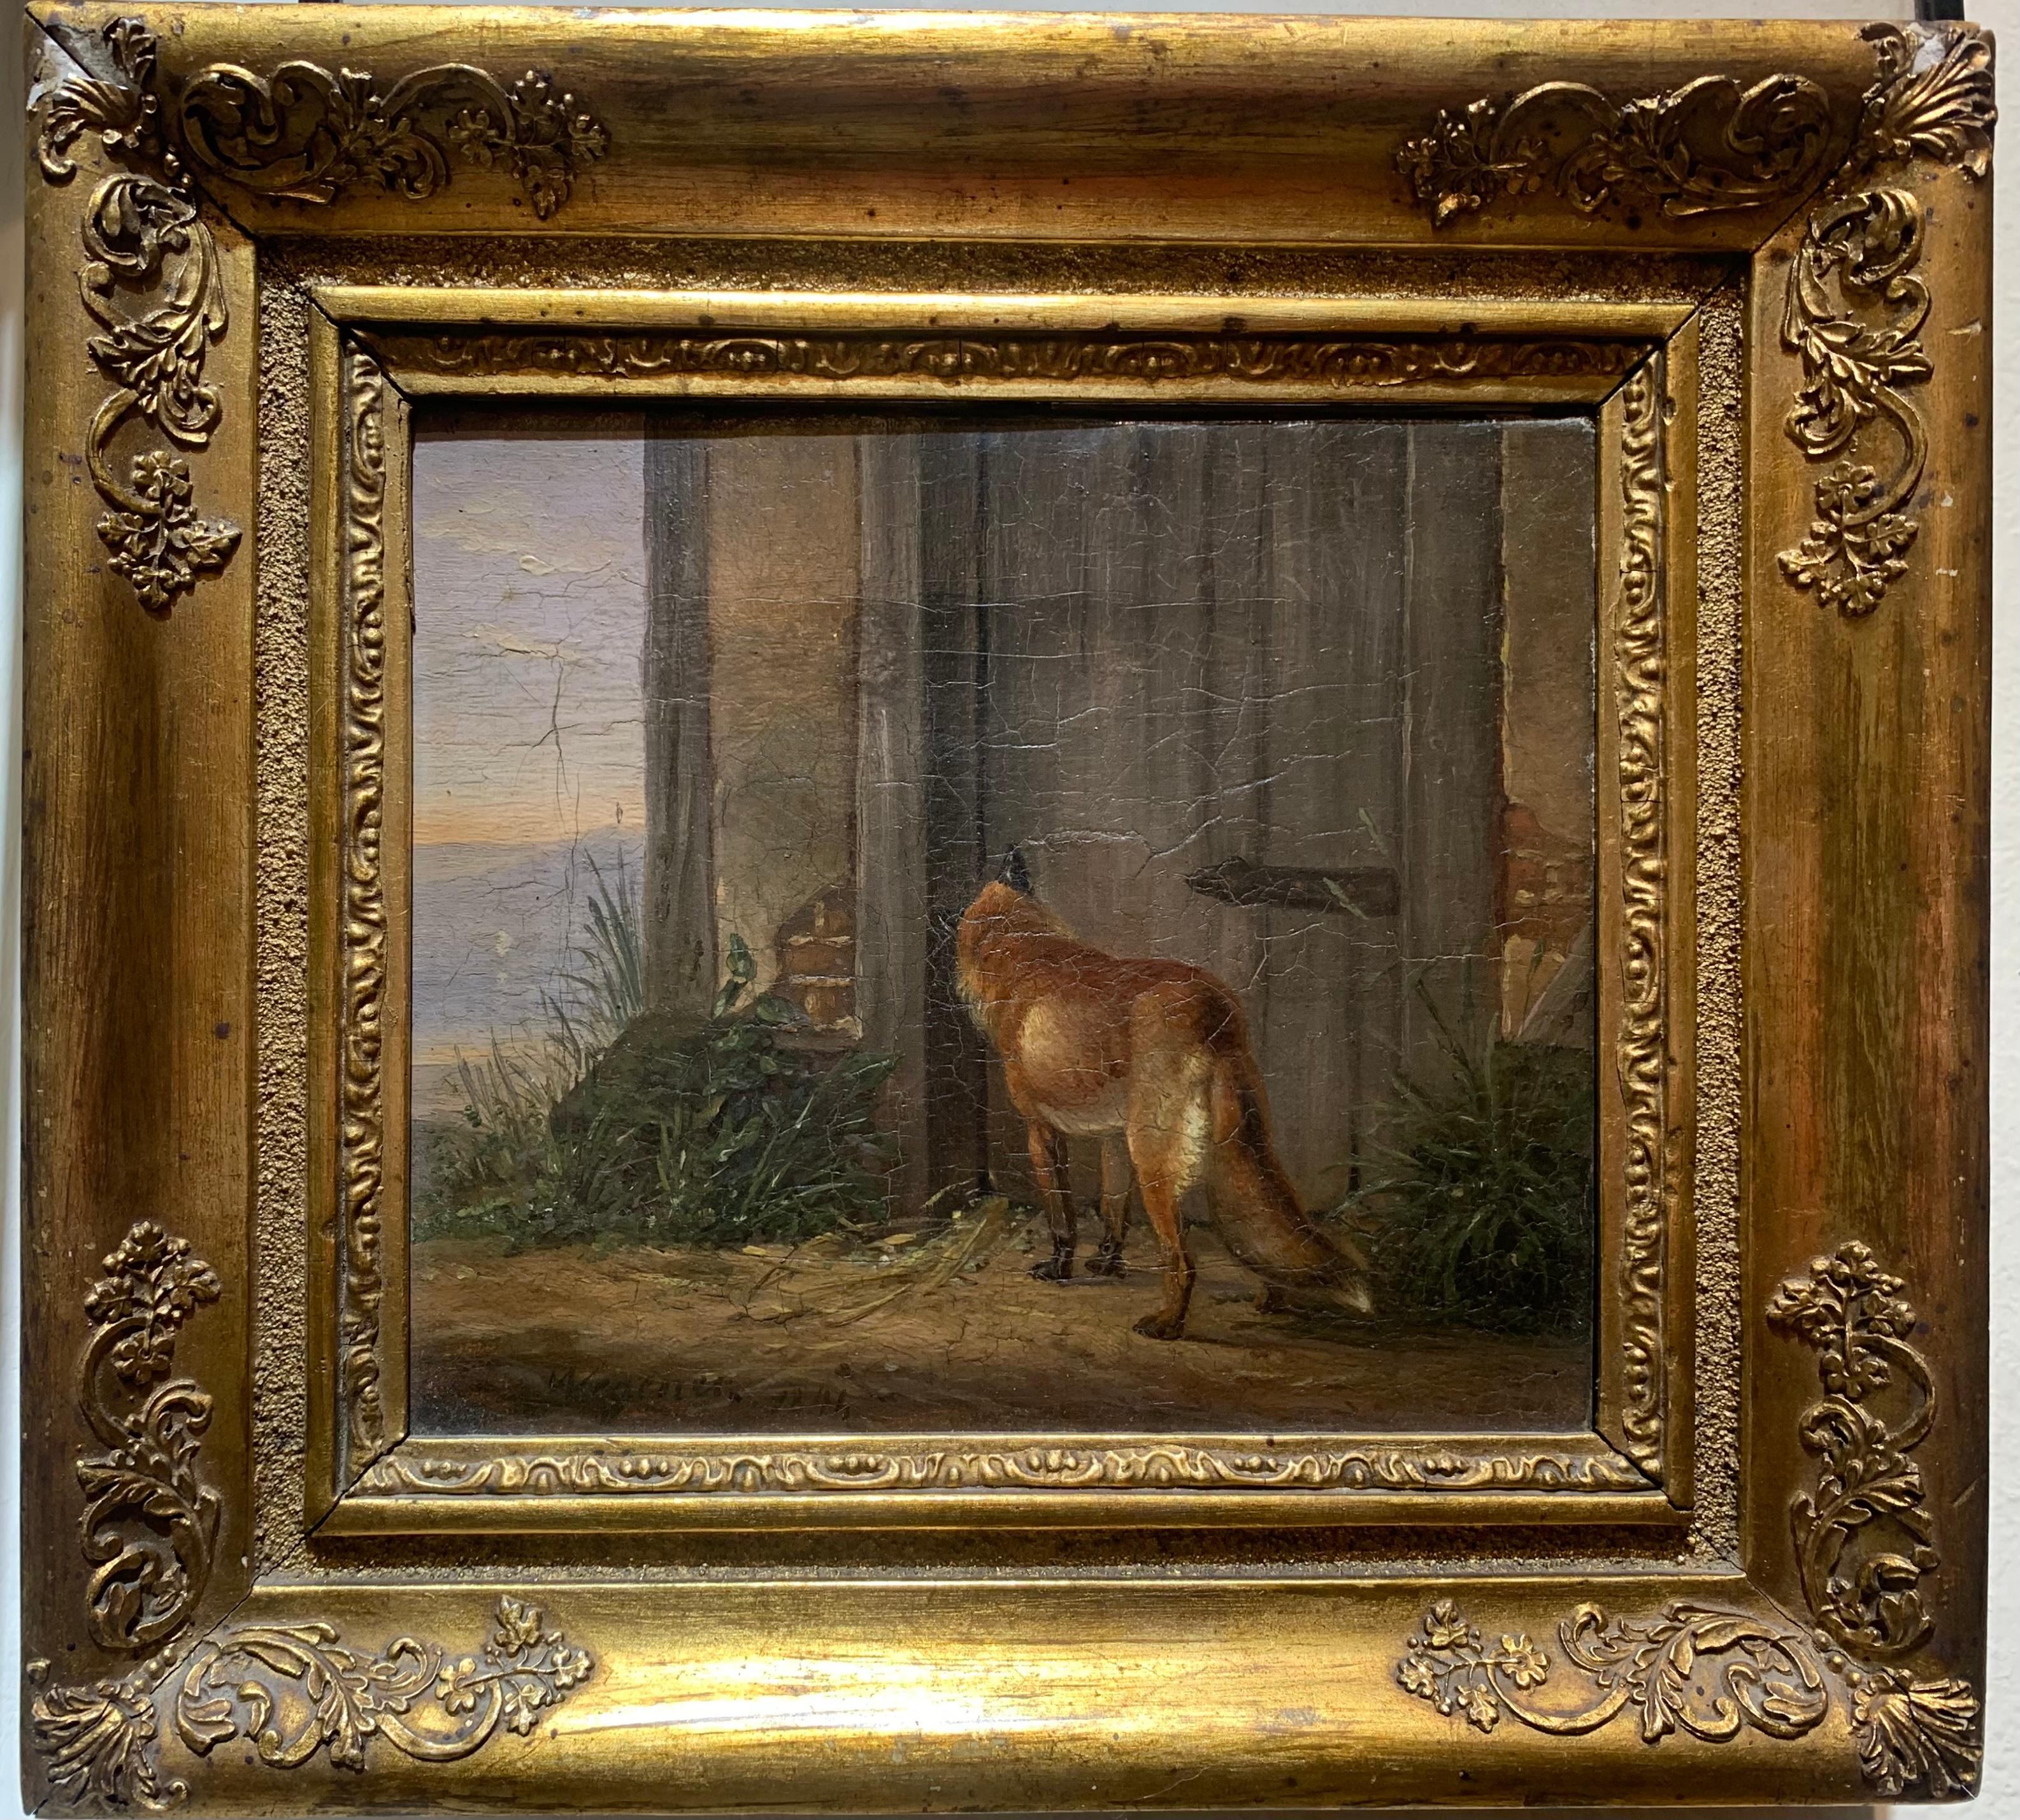 Johann Friedrich Wilhelm Wegener Animal Painting - The Fox Hunting a Prey. Painting signed Wegener, dated 1841.